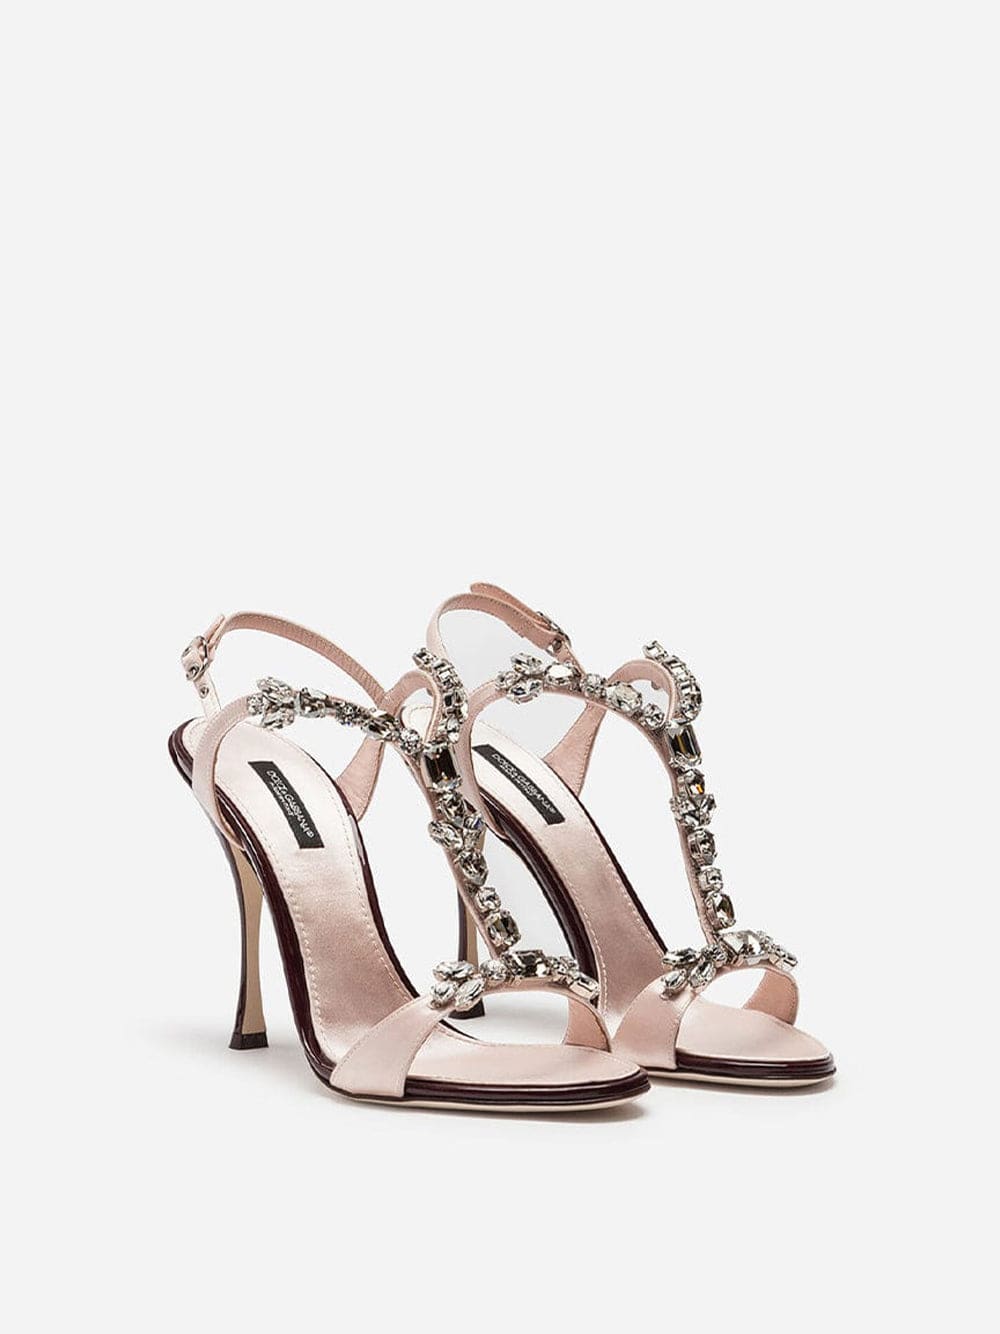 Dolce & Gabbana Crystal-Embellished Kiera T-Strap Sandals